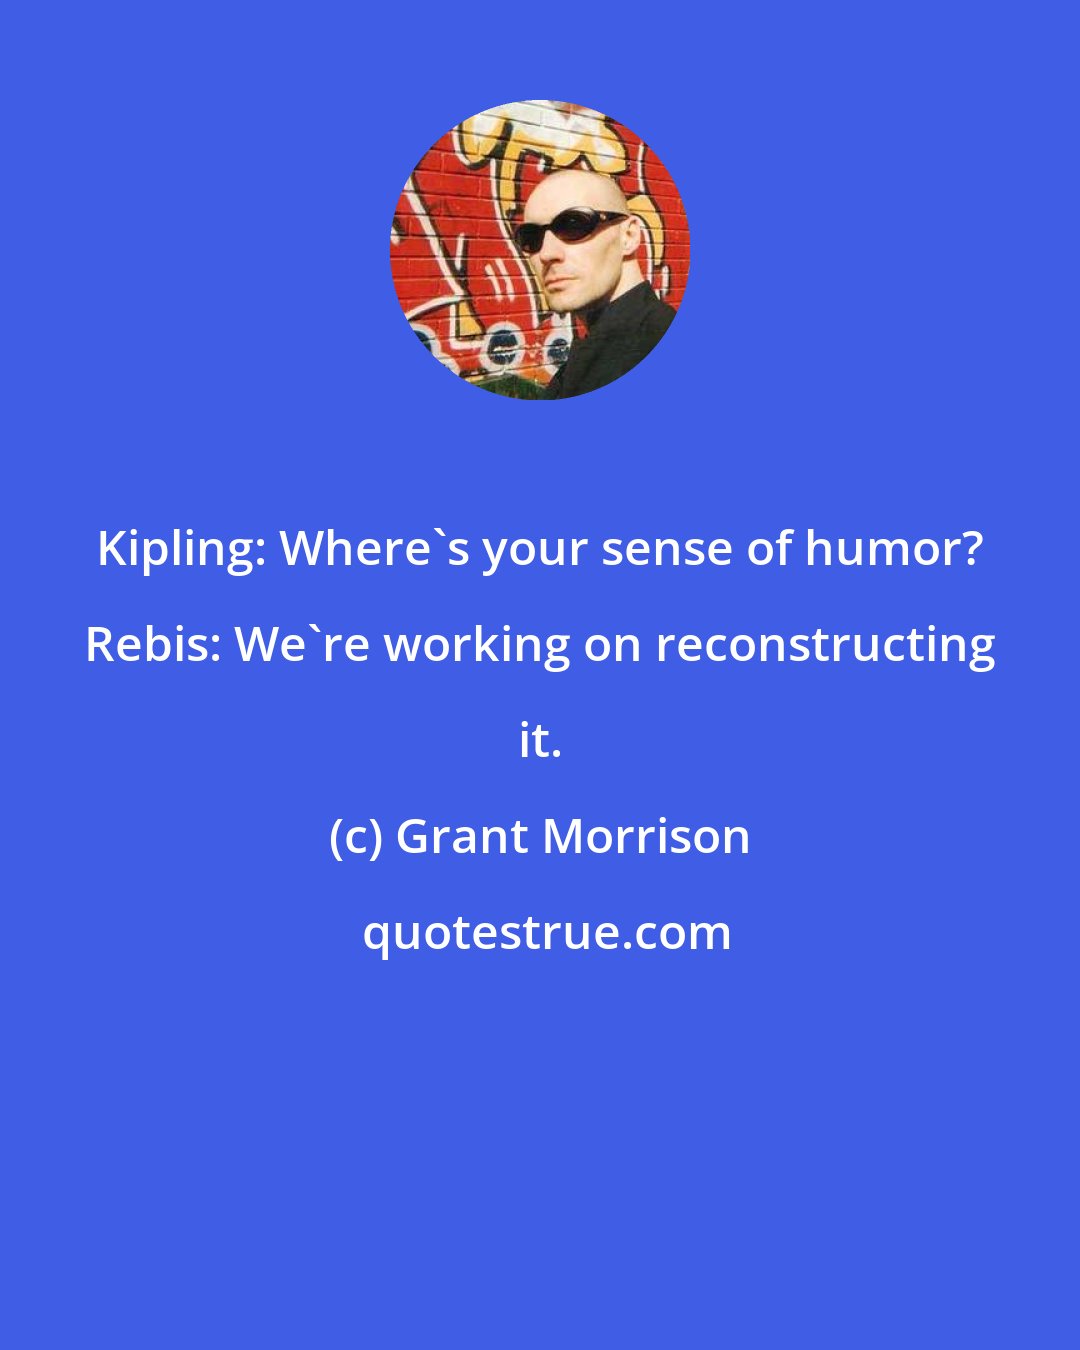 Grant Morrison: Kipling: Where's your sense of humor? Rebis: We're working on reconstructing it.